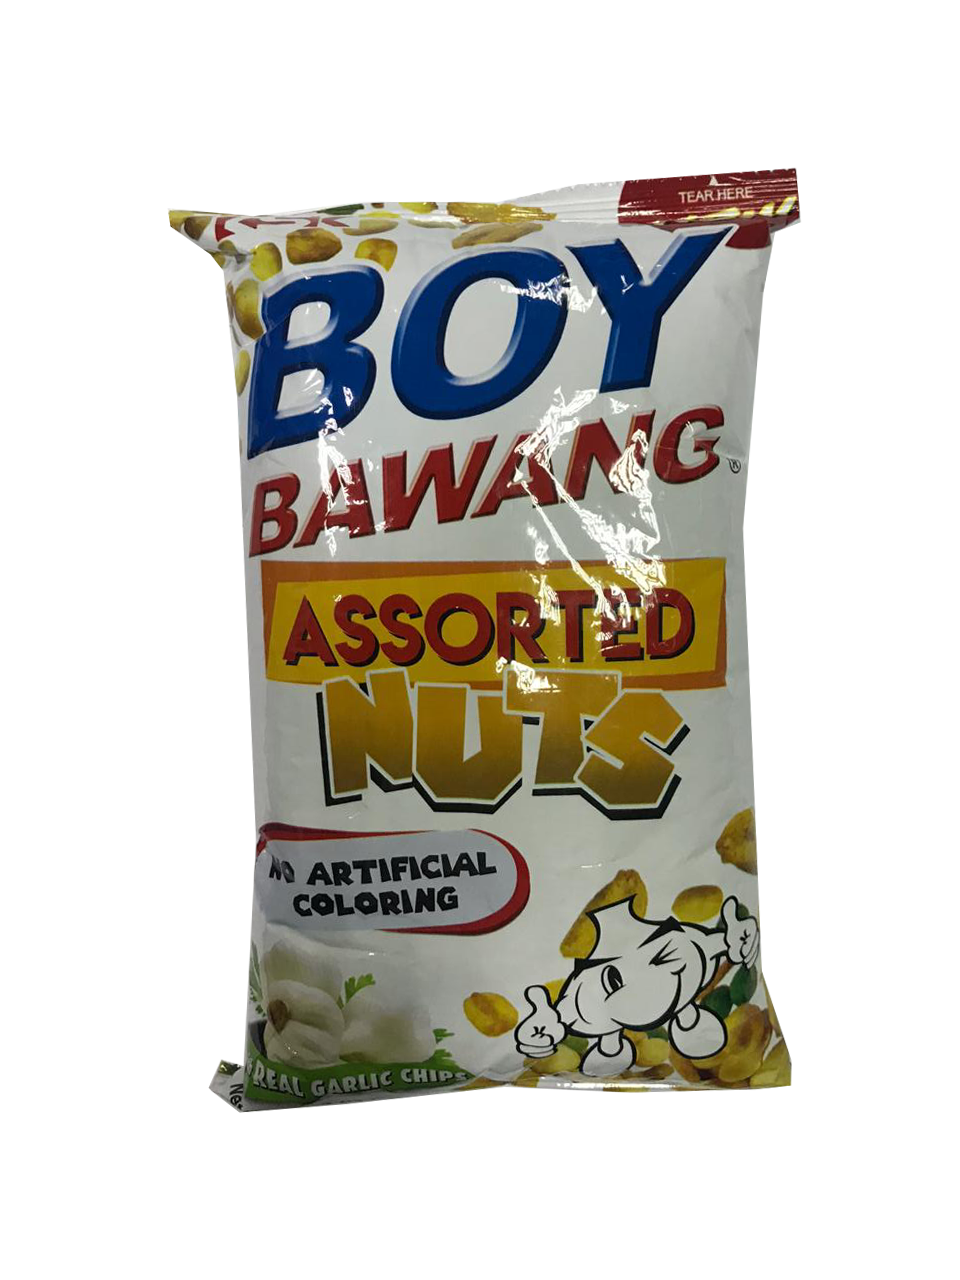 Boy Bawang Assorted Nuts 85g